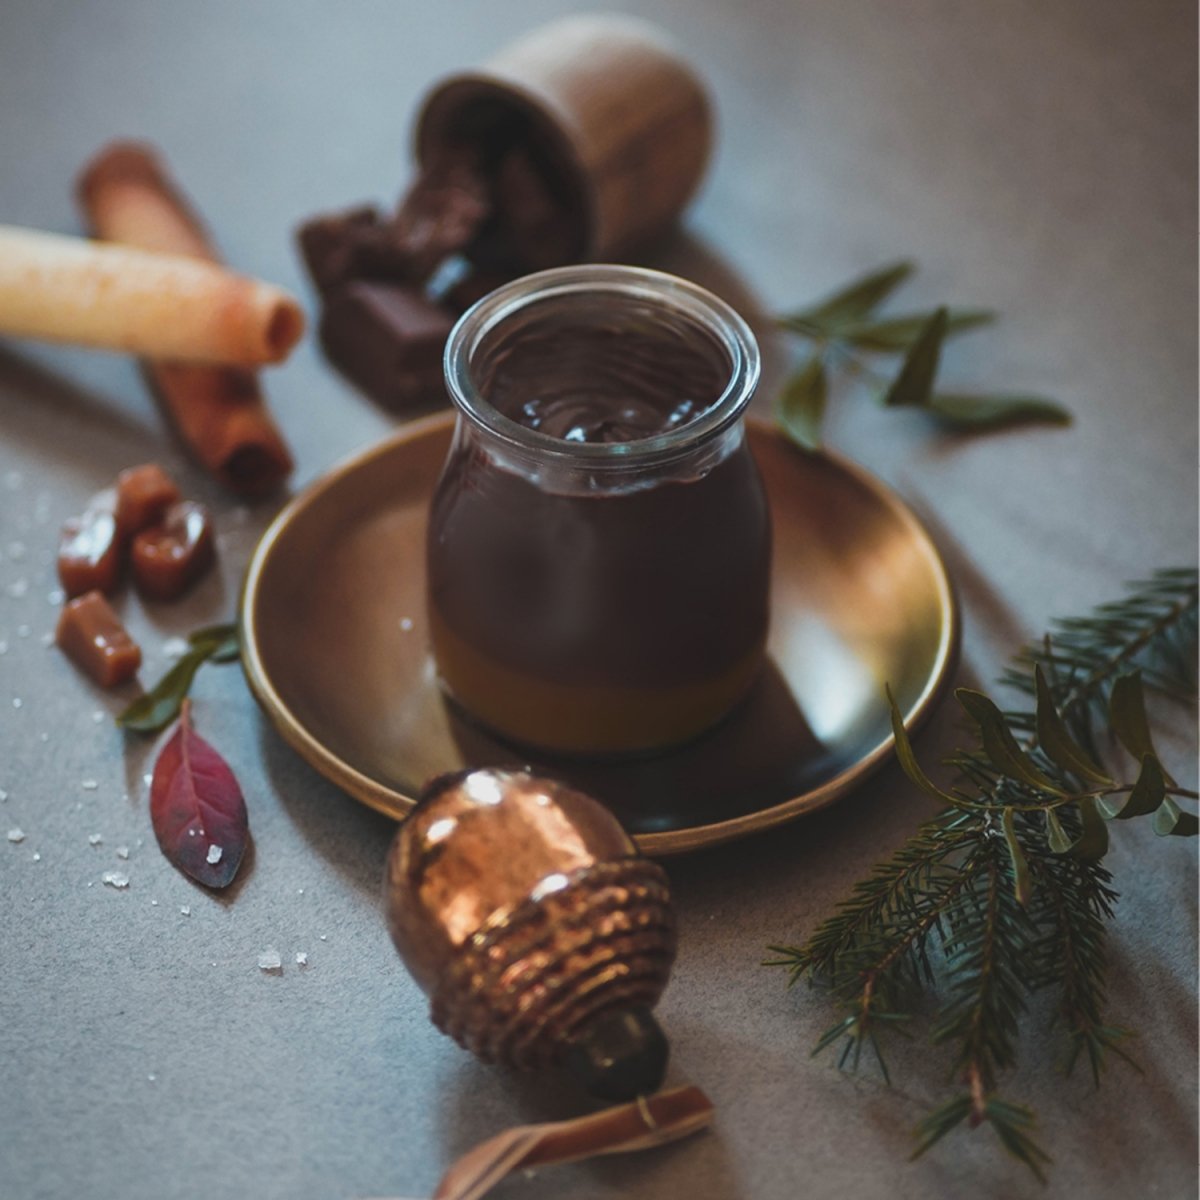 Crema de chocolate belga y caramelo salado elaborada por Goshua